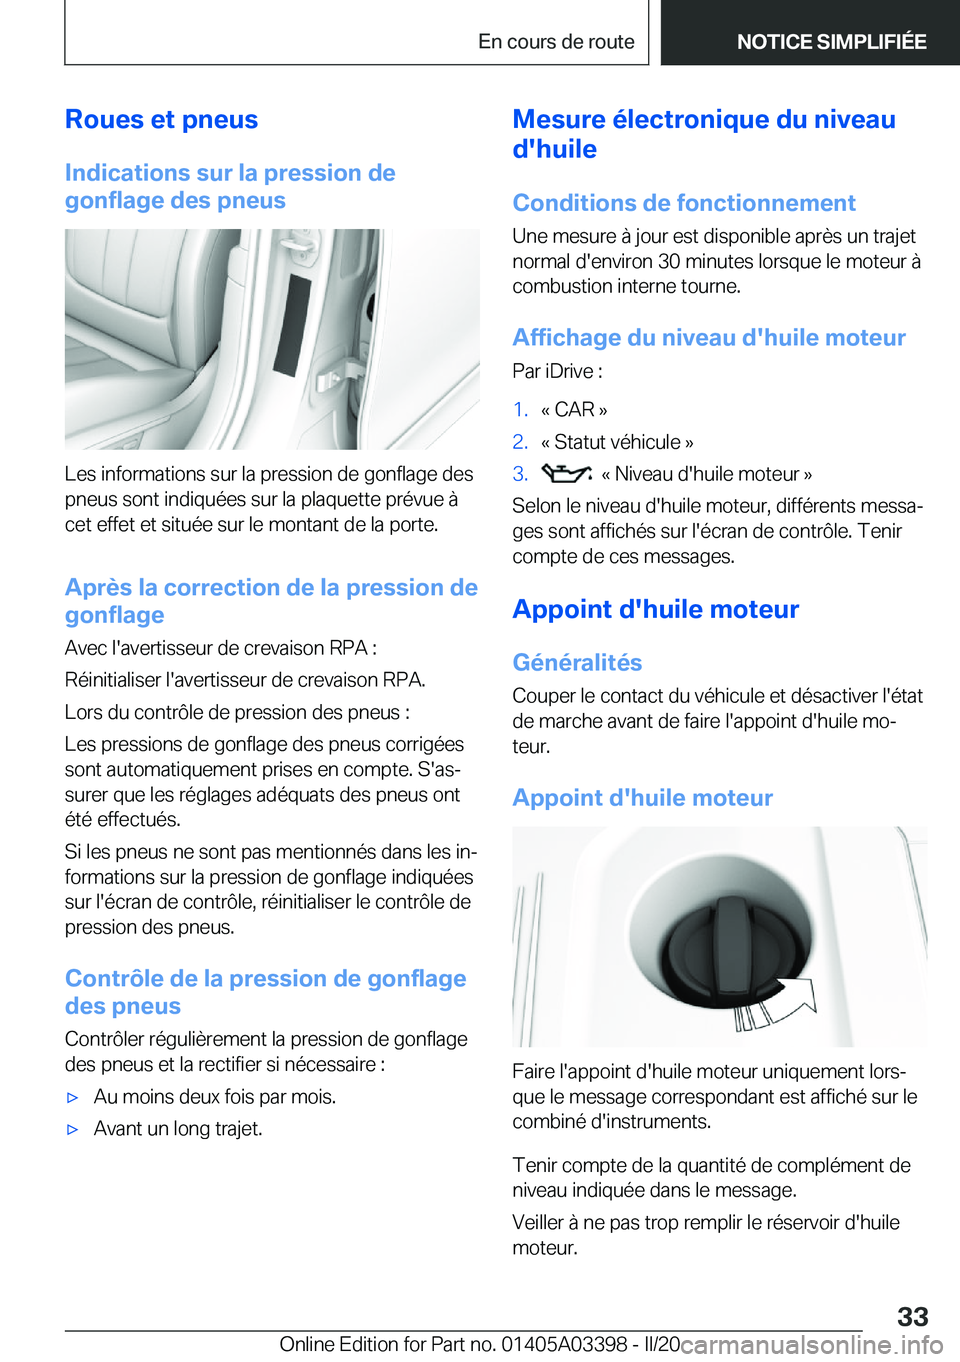 BMW M8 GRAN COUPE 2020  Notices Demploi (in French) �R�o�u�e�s��e�t��p�n�e�u�s
�I�n�d�i�c�a�t�i�o�n�s��s�u�r��l�a��p�r�e�s�s�i�o�n��d�e
�g�o�n�f�l�a�g�e��d�e�s��p�n�e�u�s
�L�e�s��i�n�f�o�r�m�a�t�i�o�n�s��s�u�r��l�a��p�r�e�s�s�i�o�n��d�e��